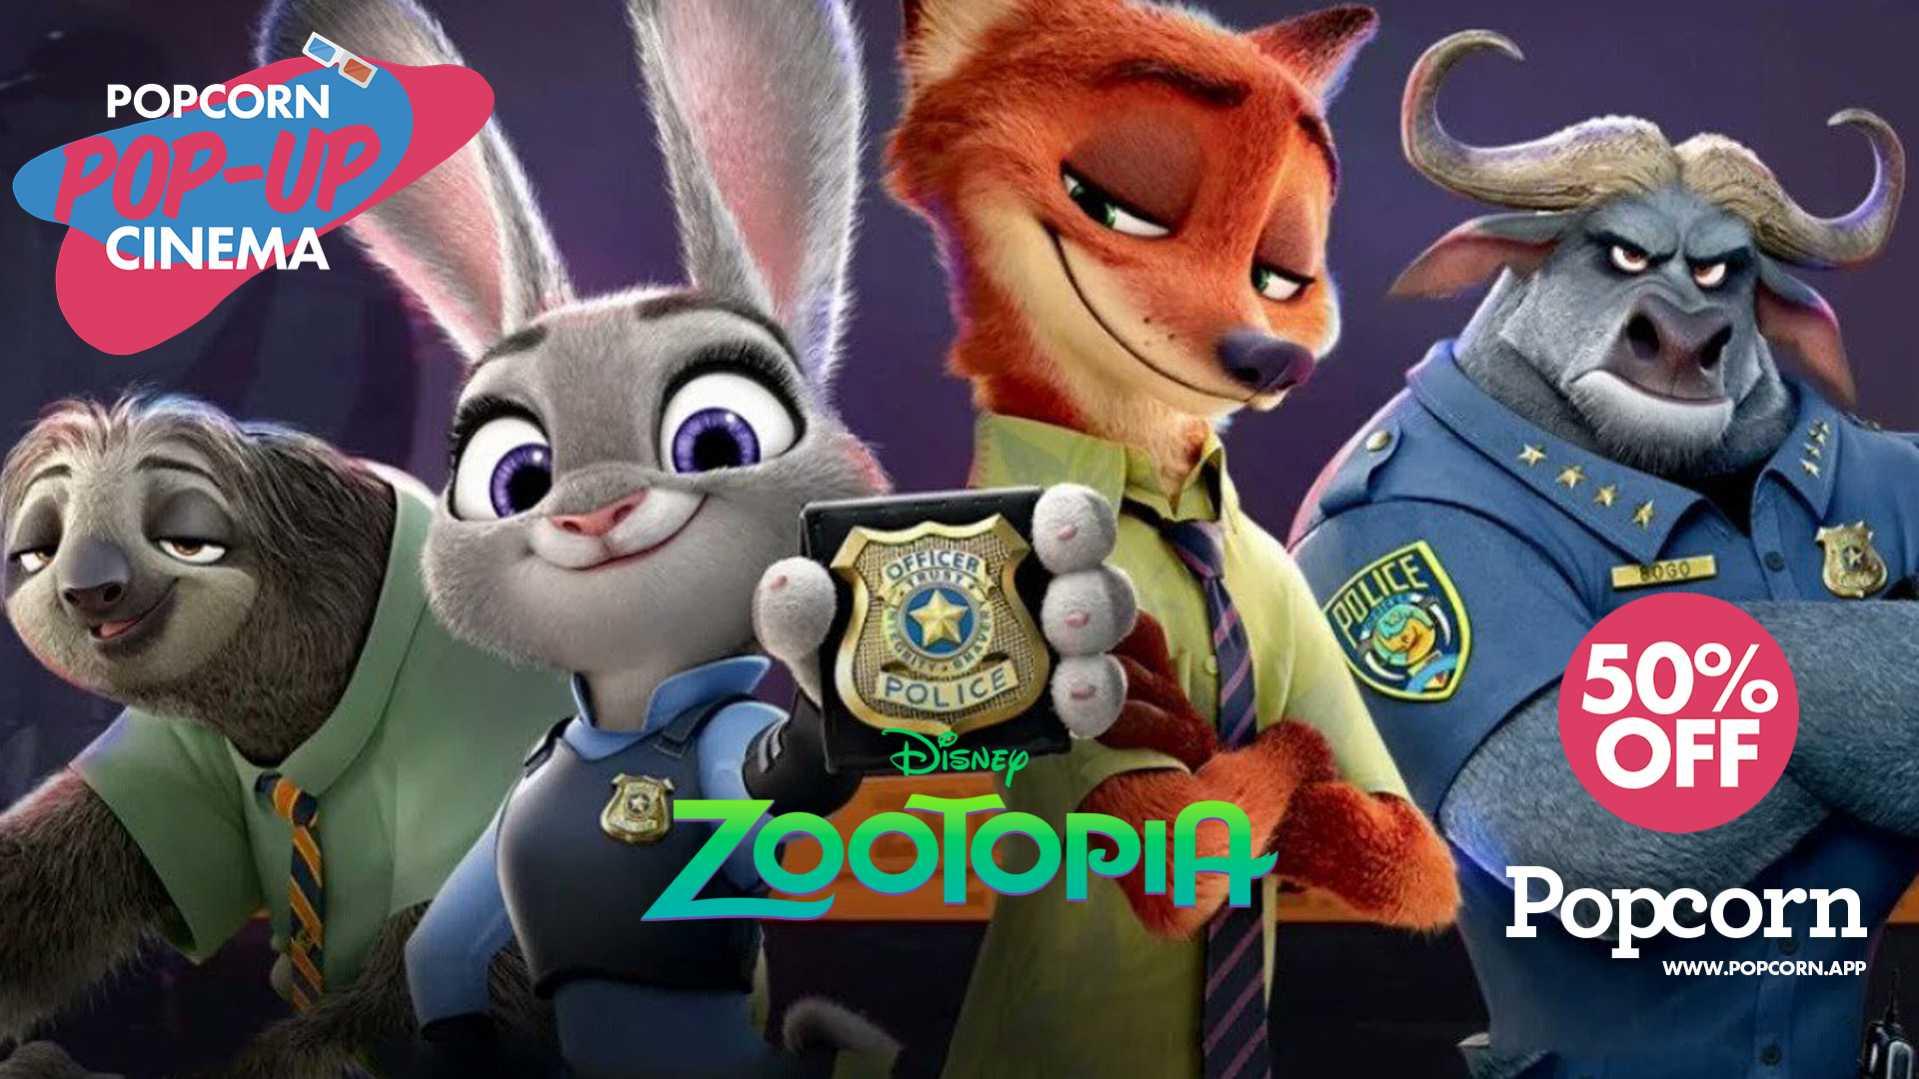 Zootopia Pop-Up Cinema by Popcorn App